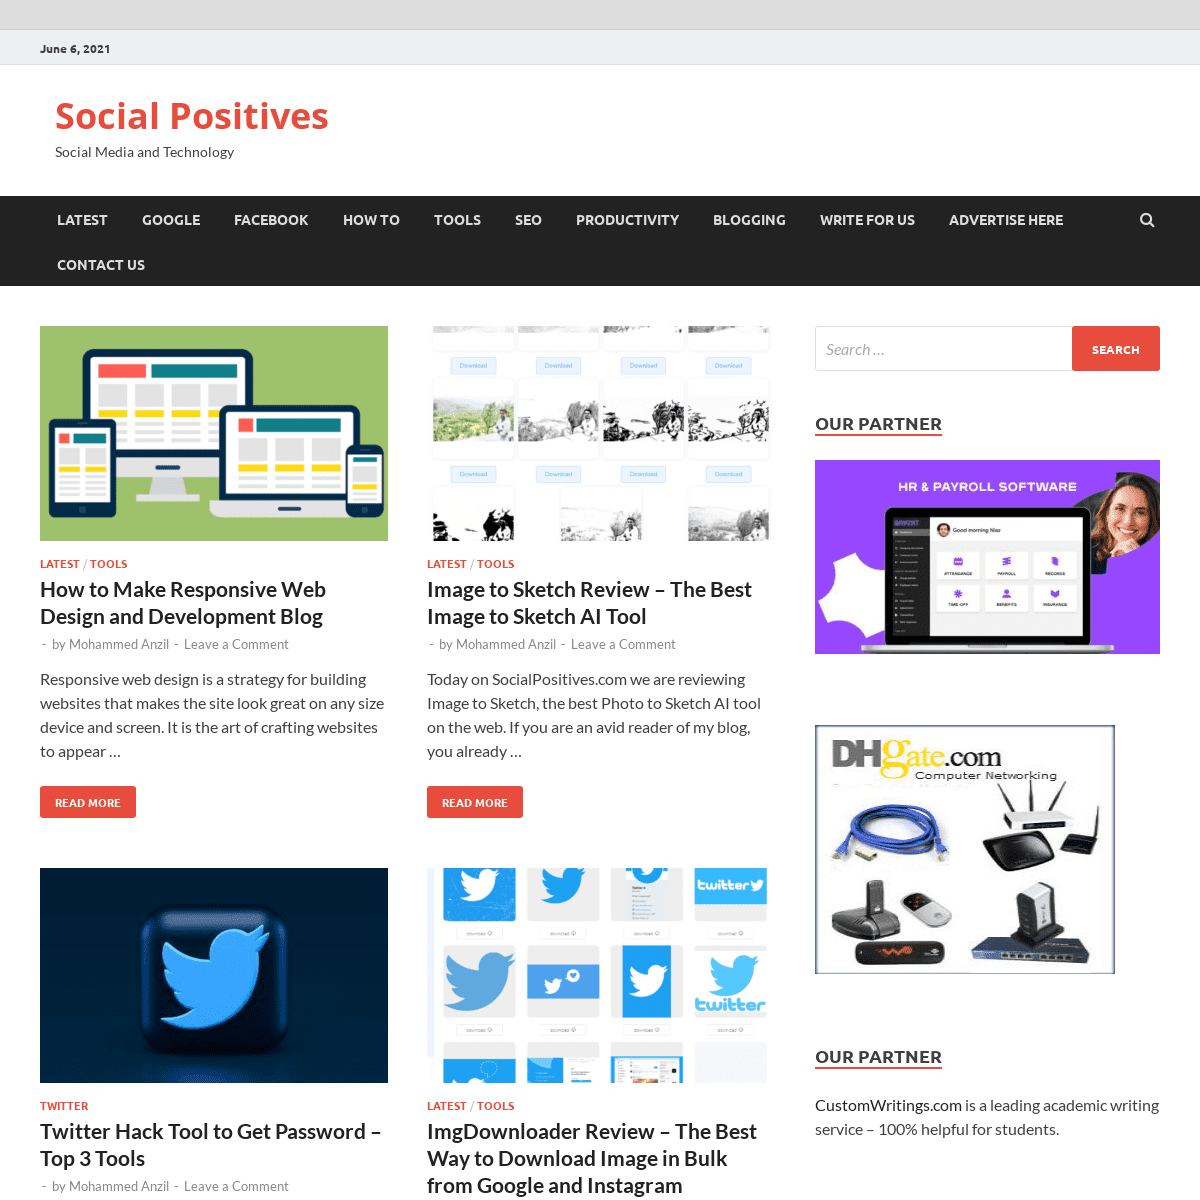 Social Positives - Social Media and Technology